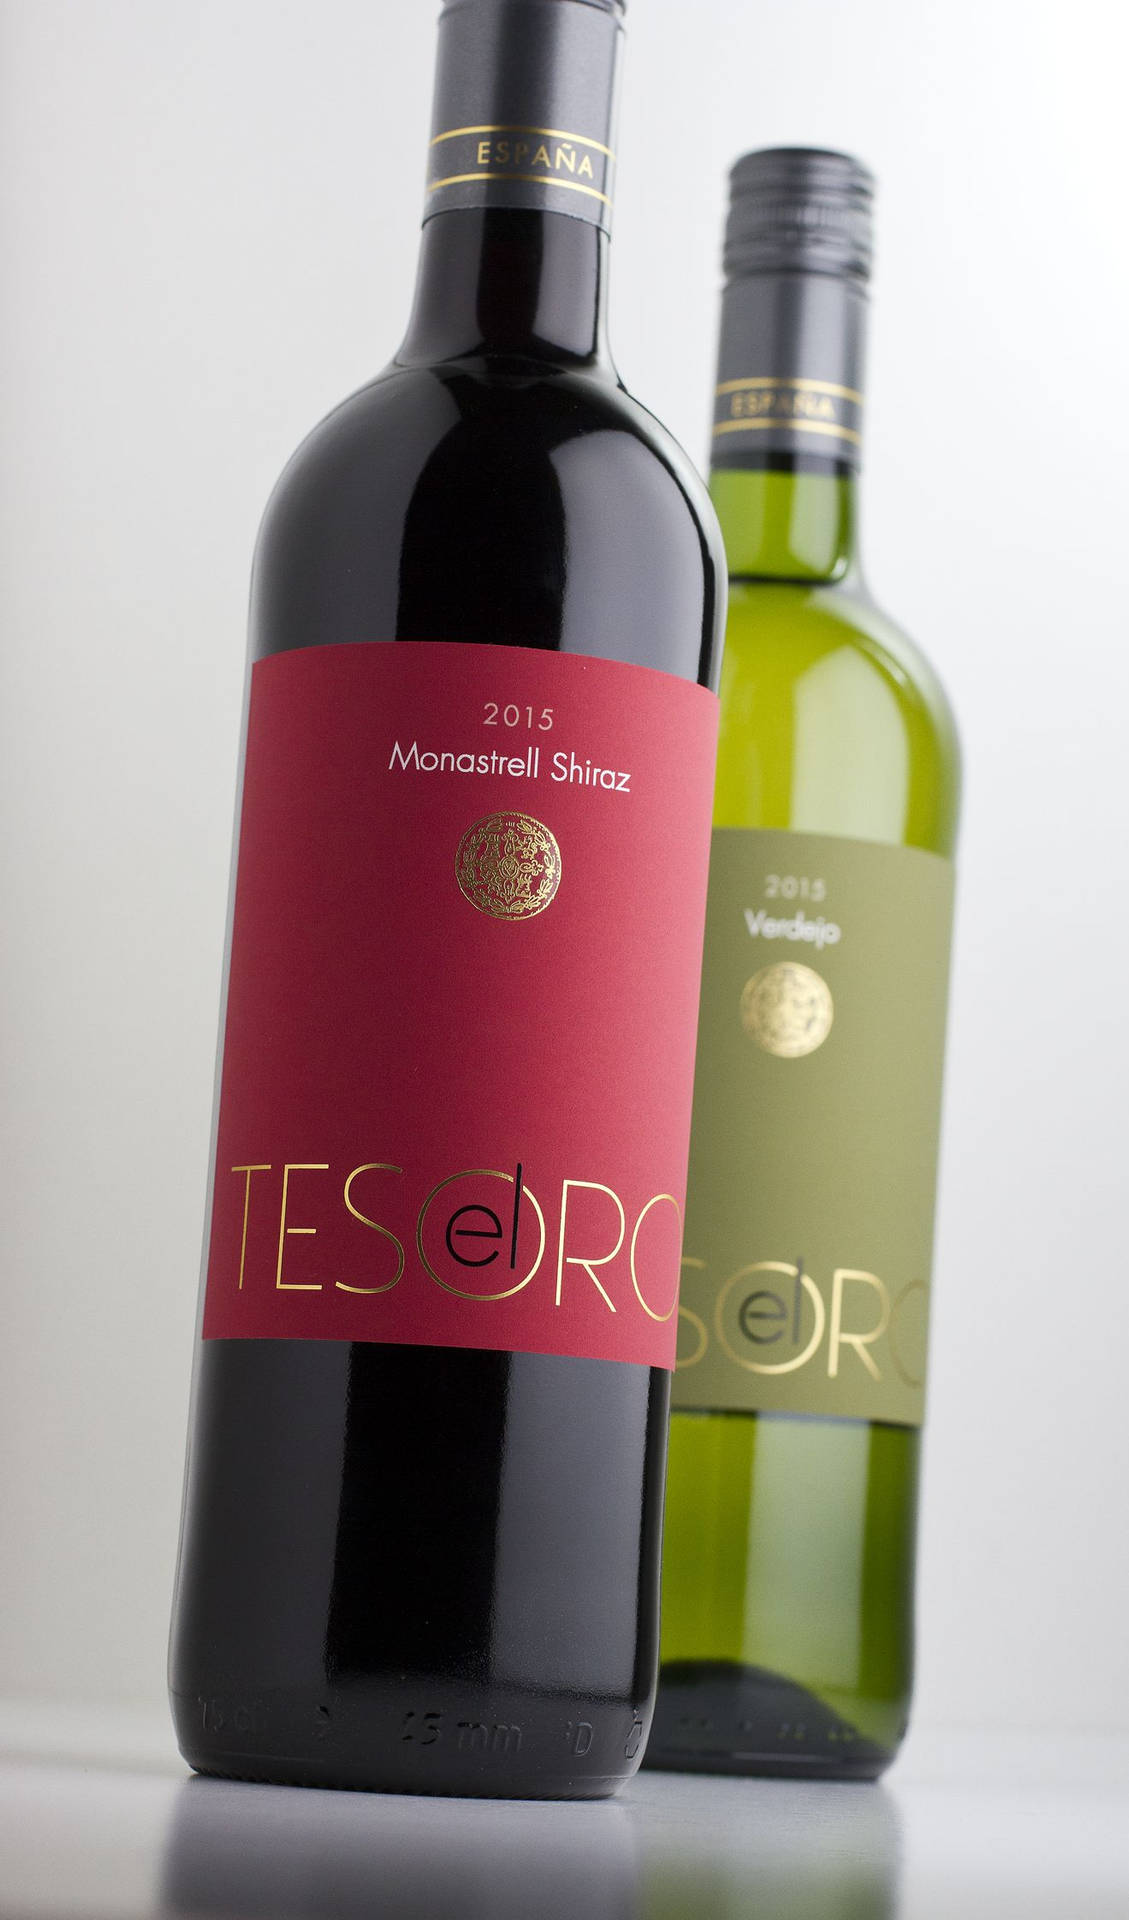 El Tesoro Monastrell Shiraz And Verdejo Wine Picture